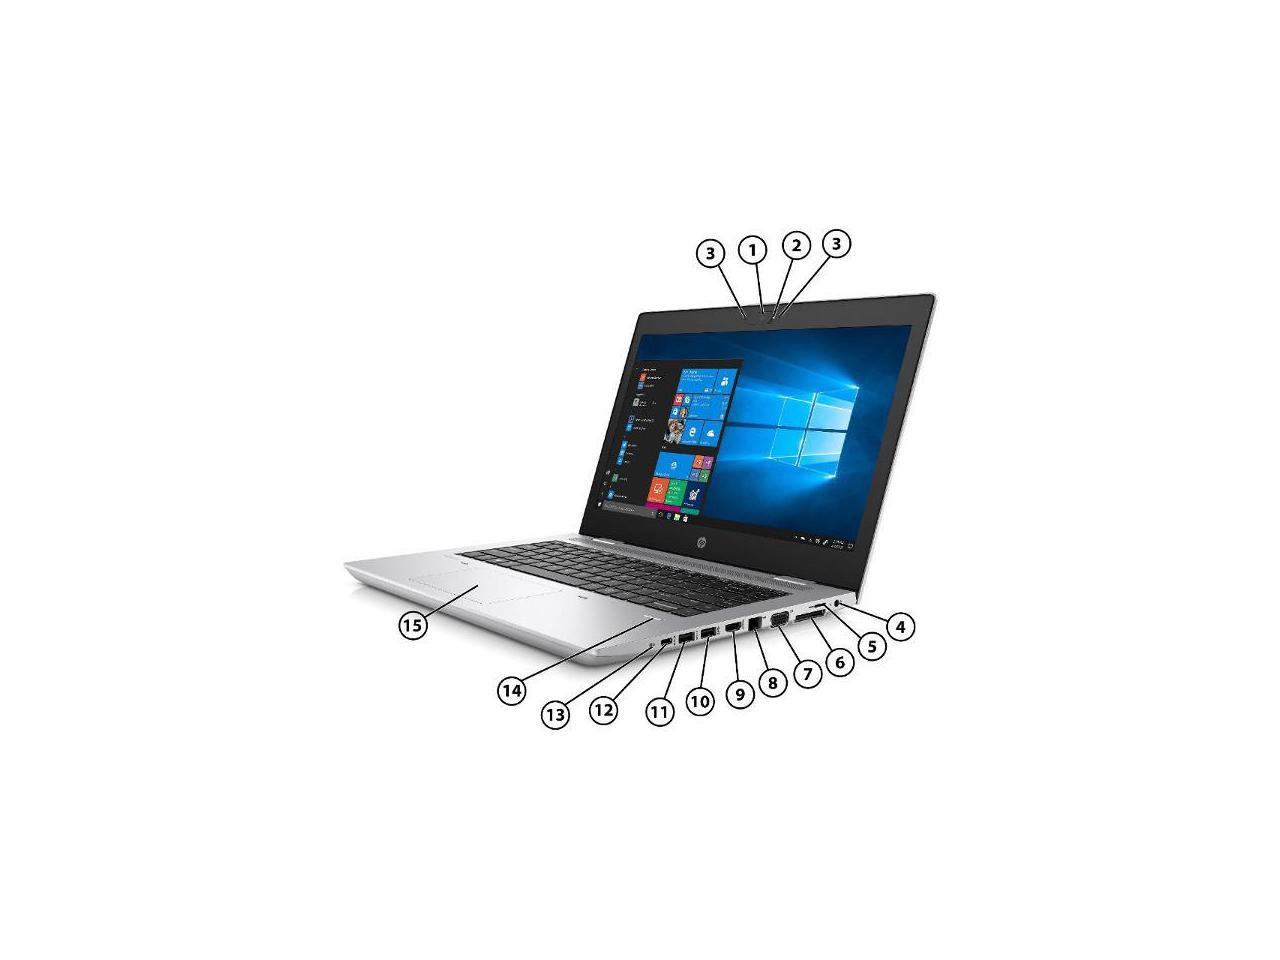 HP Laptop ProBook 640 G4 (5KE82UT#ABA) Intel Core i7 7th Gen 7600U (2.80 GHz) 8 GB Memory 256 GB SSD Intel HD Graphics 620 14.0" Windows 10 Pro 64-bit